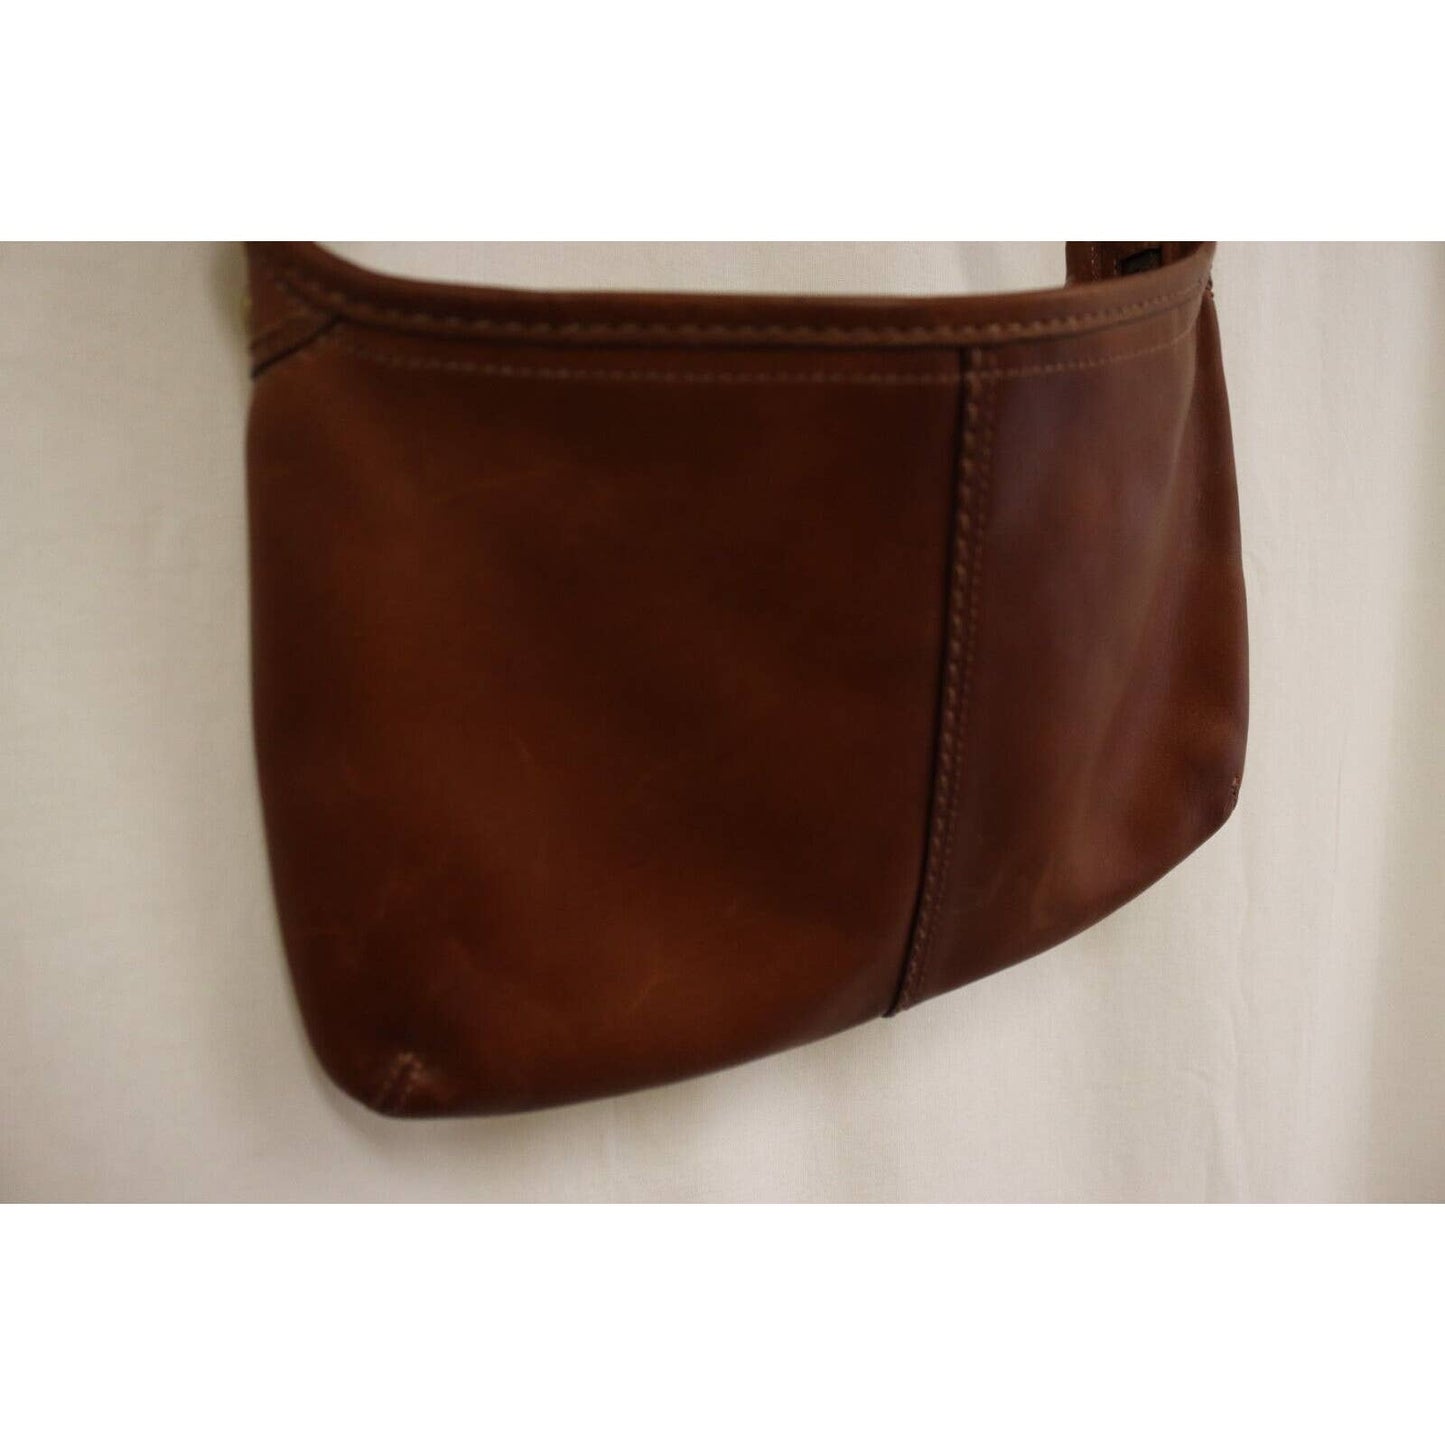 Vintage Coach Brown Leather Hobo Handbag